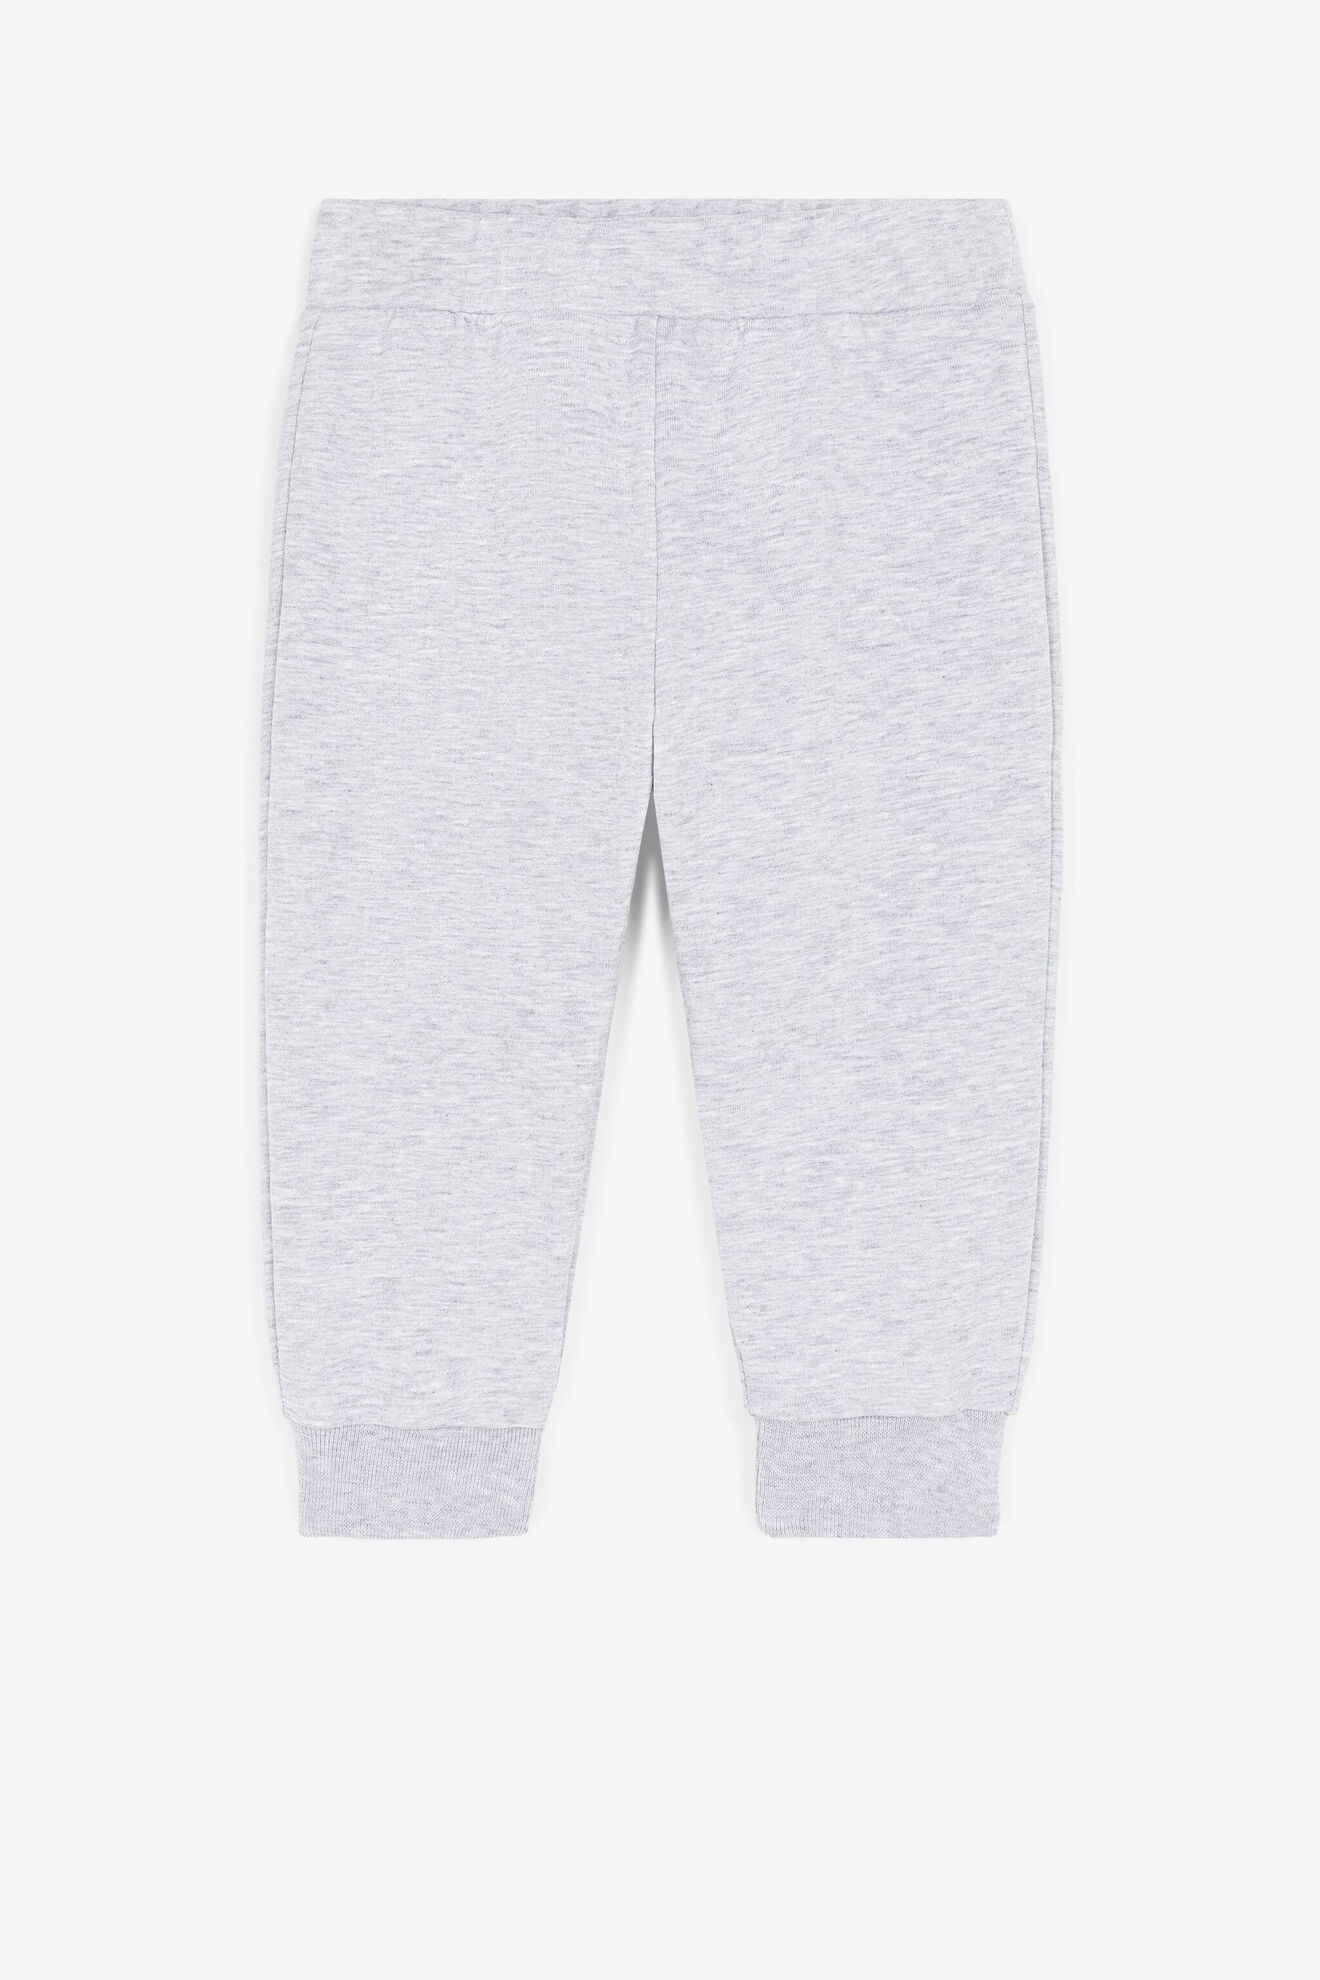 Children's Sweatpants, light grey melange: 120